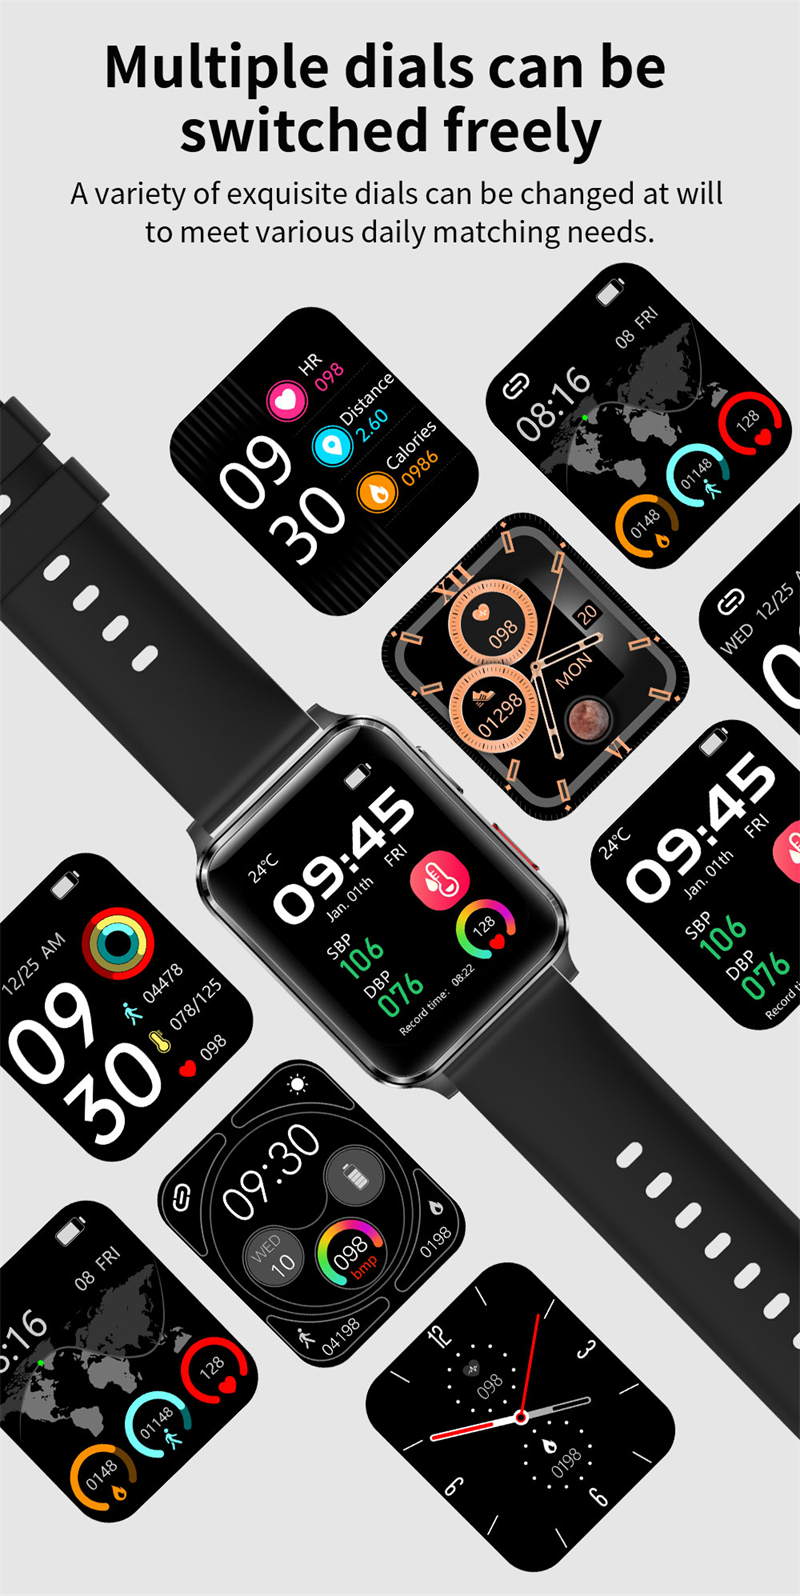 JGo 2022 Amazing smart watch reloj inteligente air pump blood pressure monitor true ecg smartwatch health watch S6